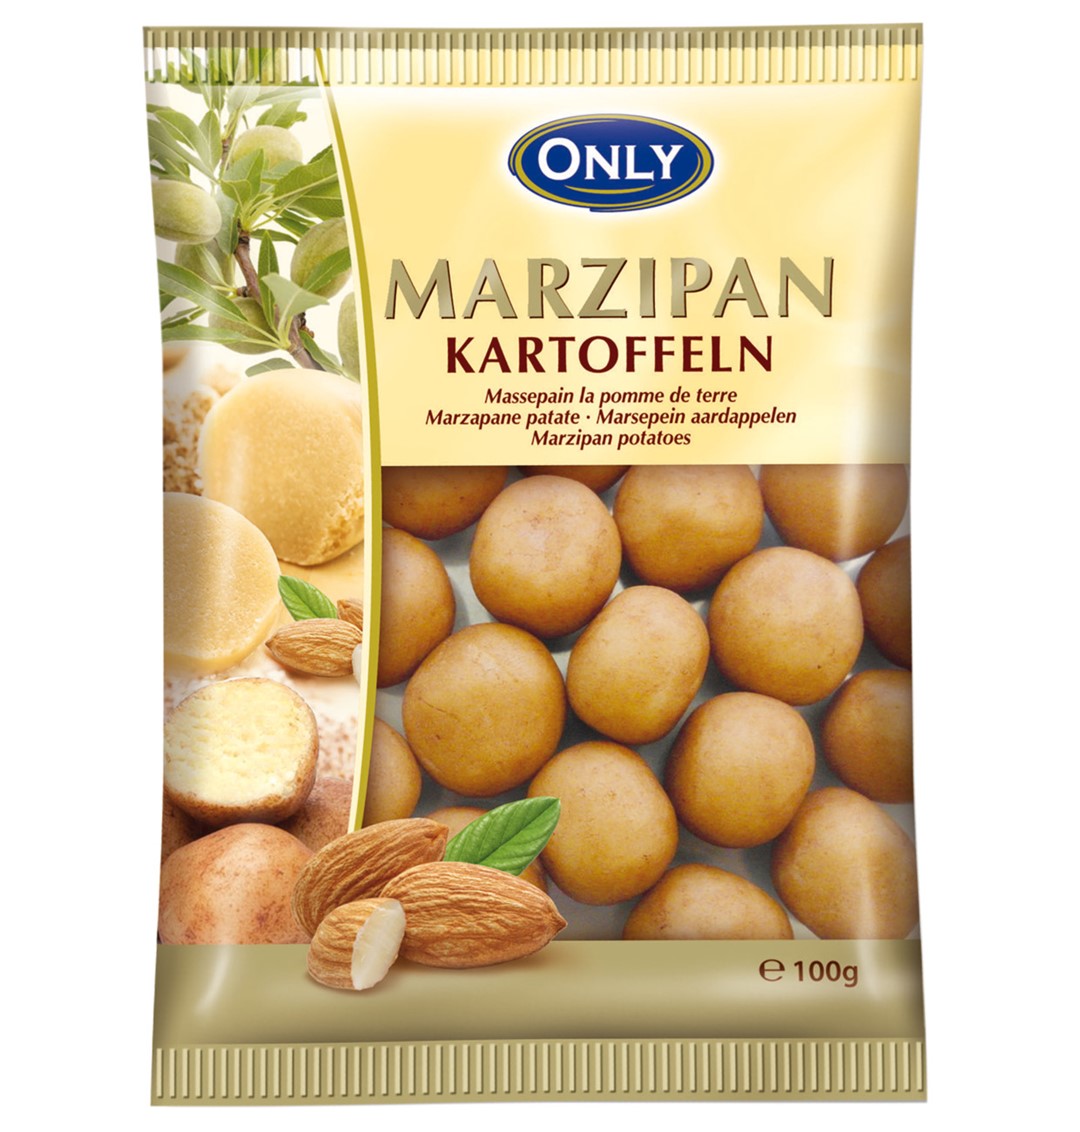 Only Marzipan Kartoffeln Marcepan 100g